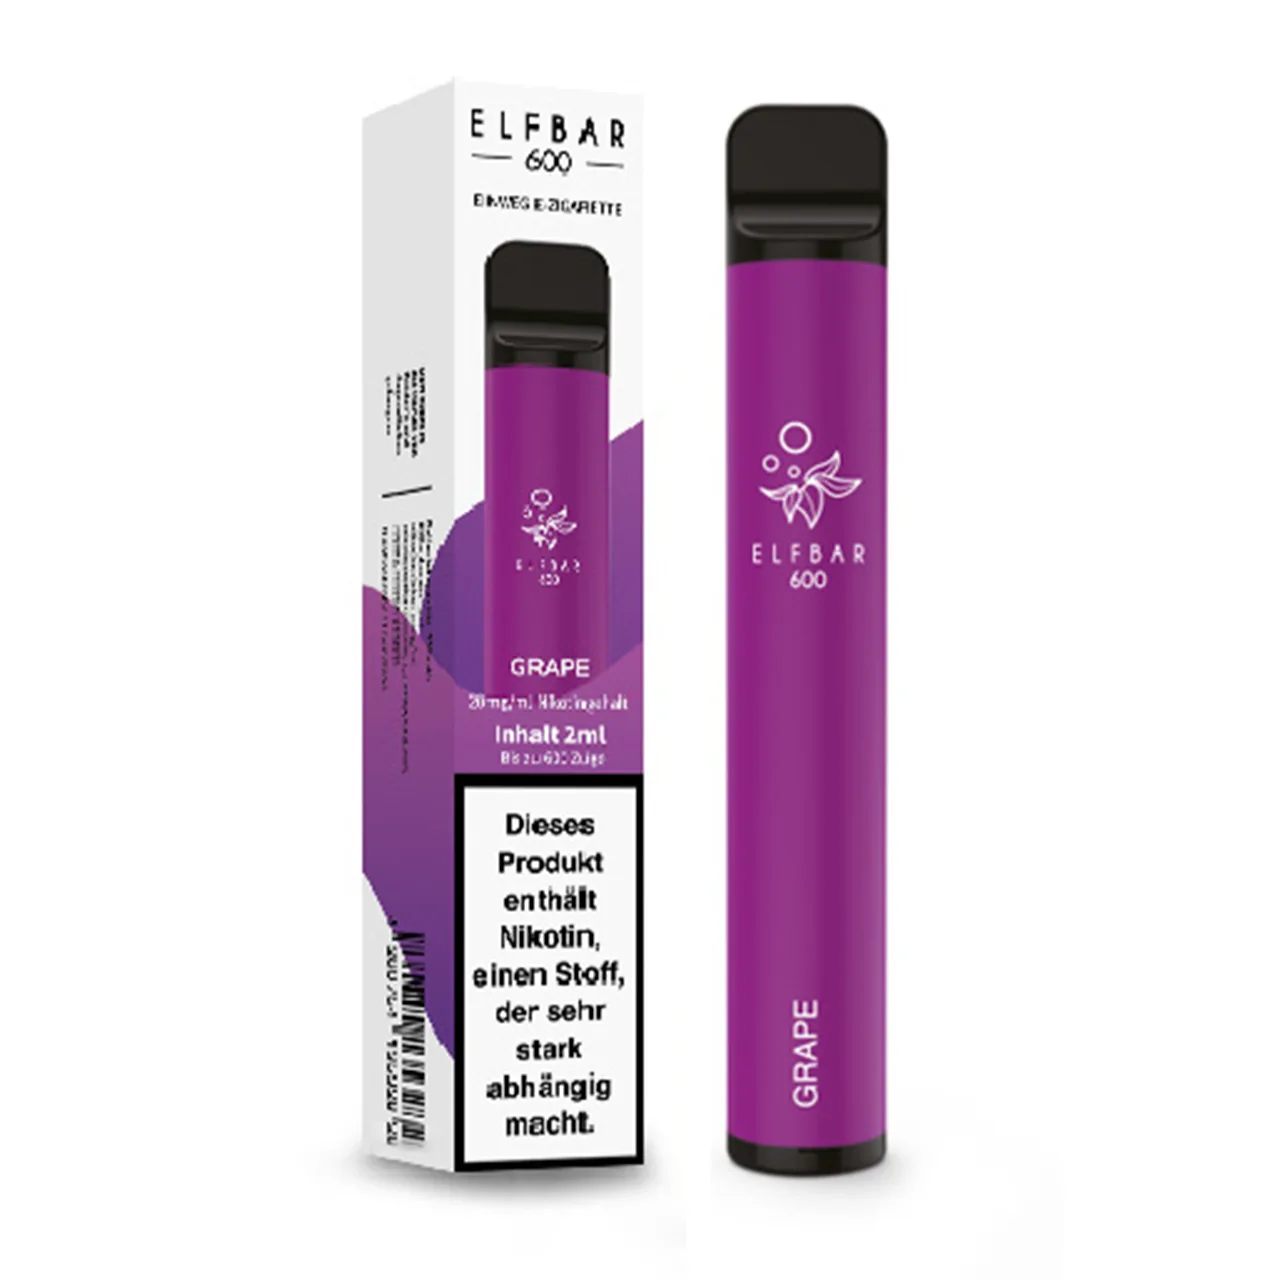 Elf Bar 600 Grape Einweg E-Zigarette Verpackung